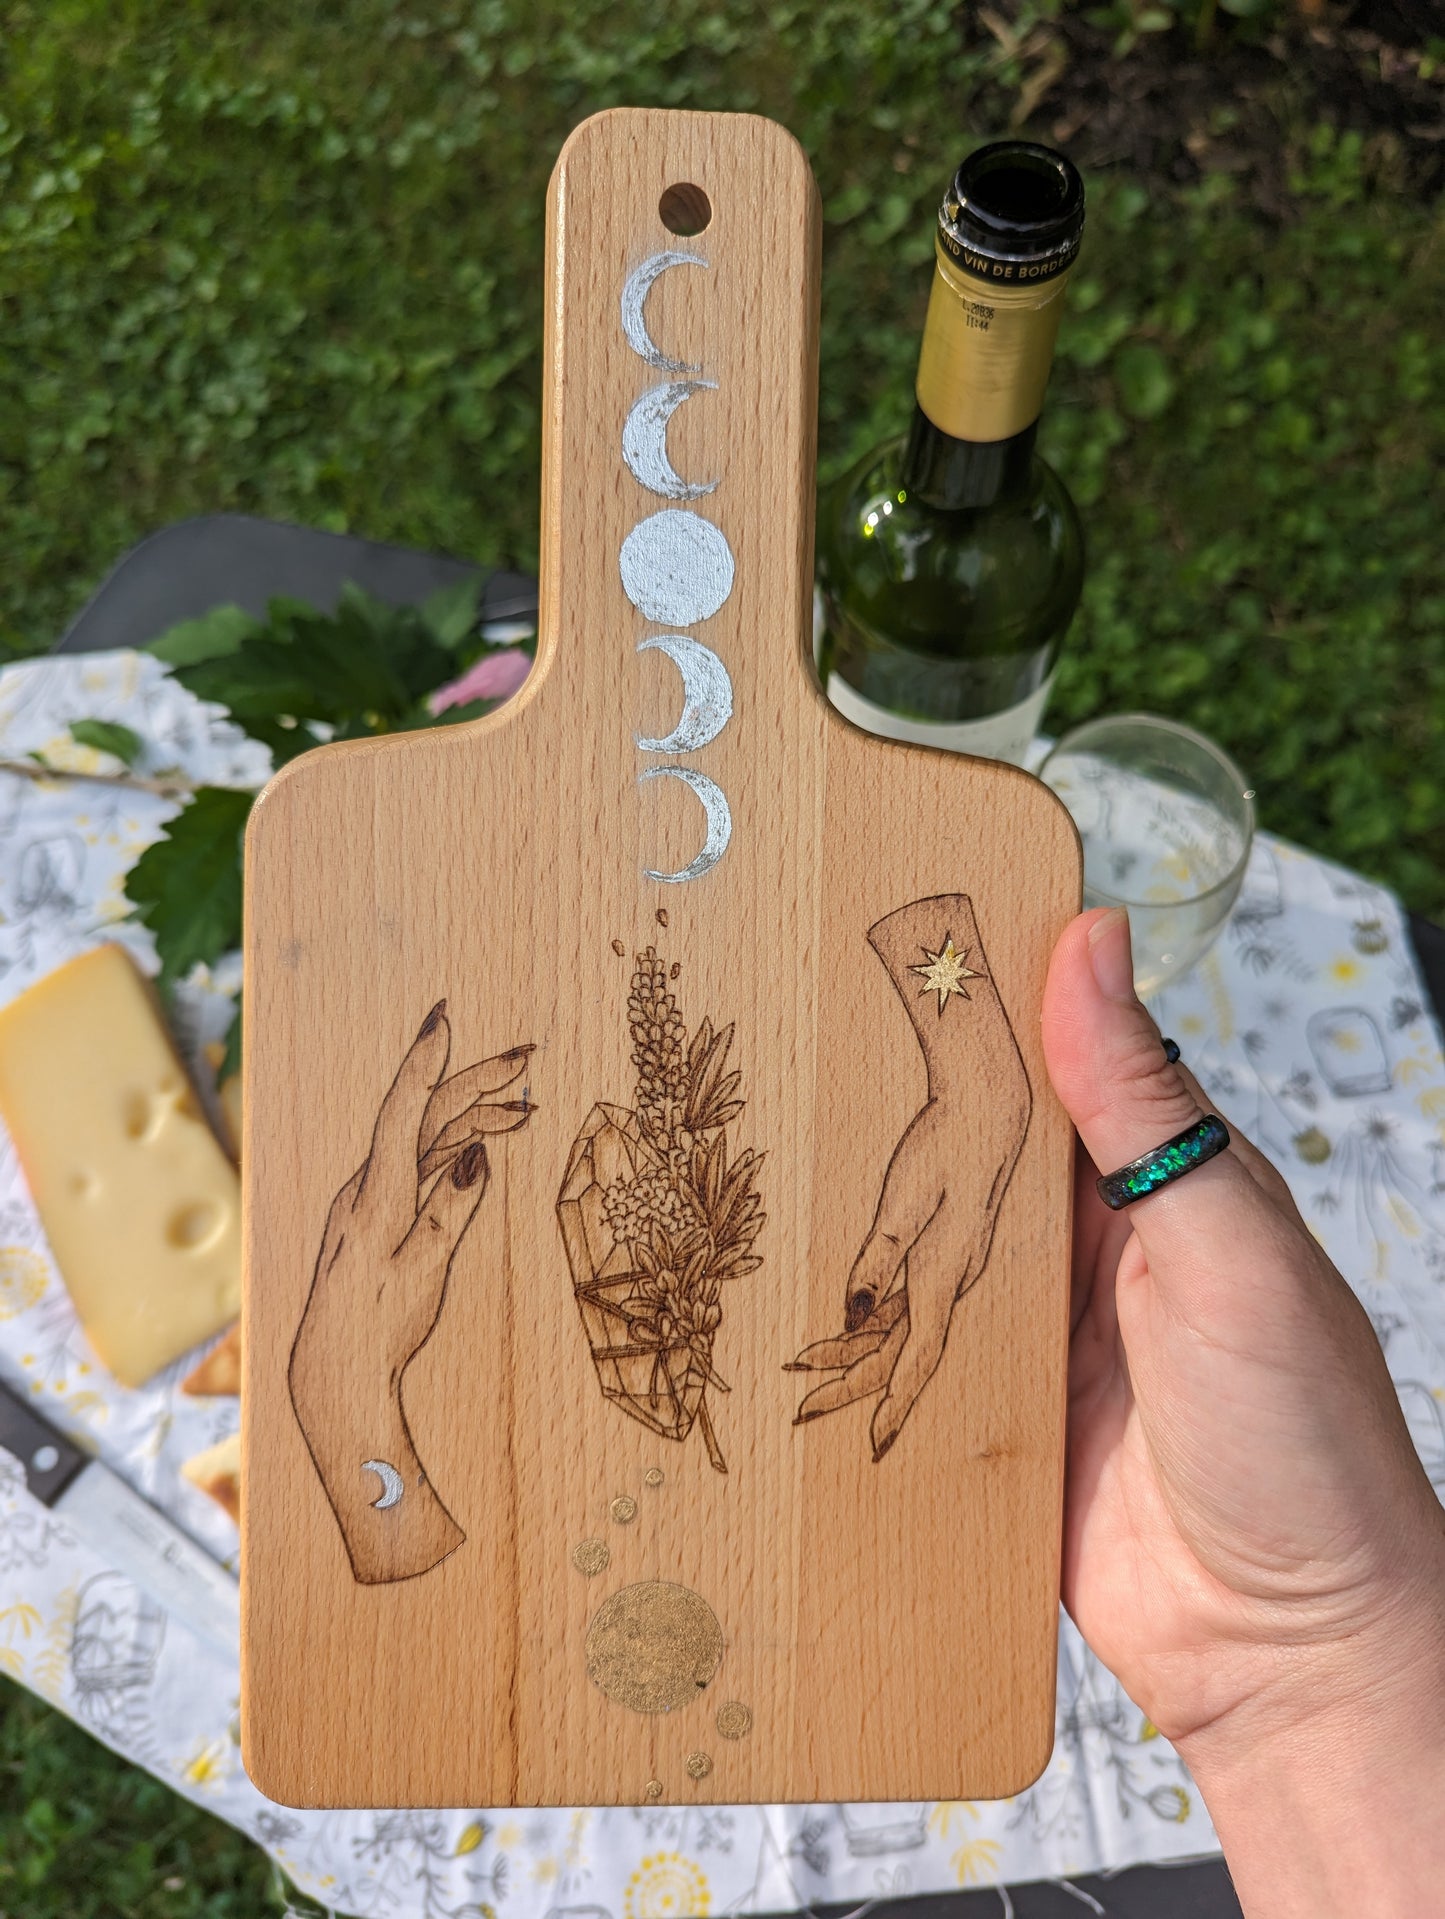 Making Magic Wooden Cutting Board Art